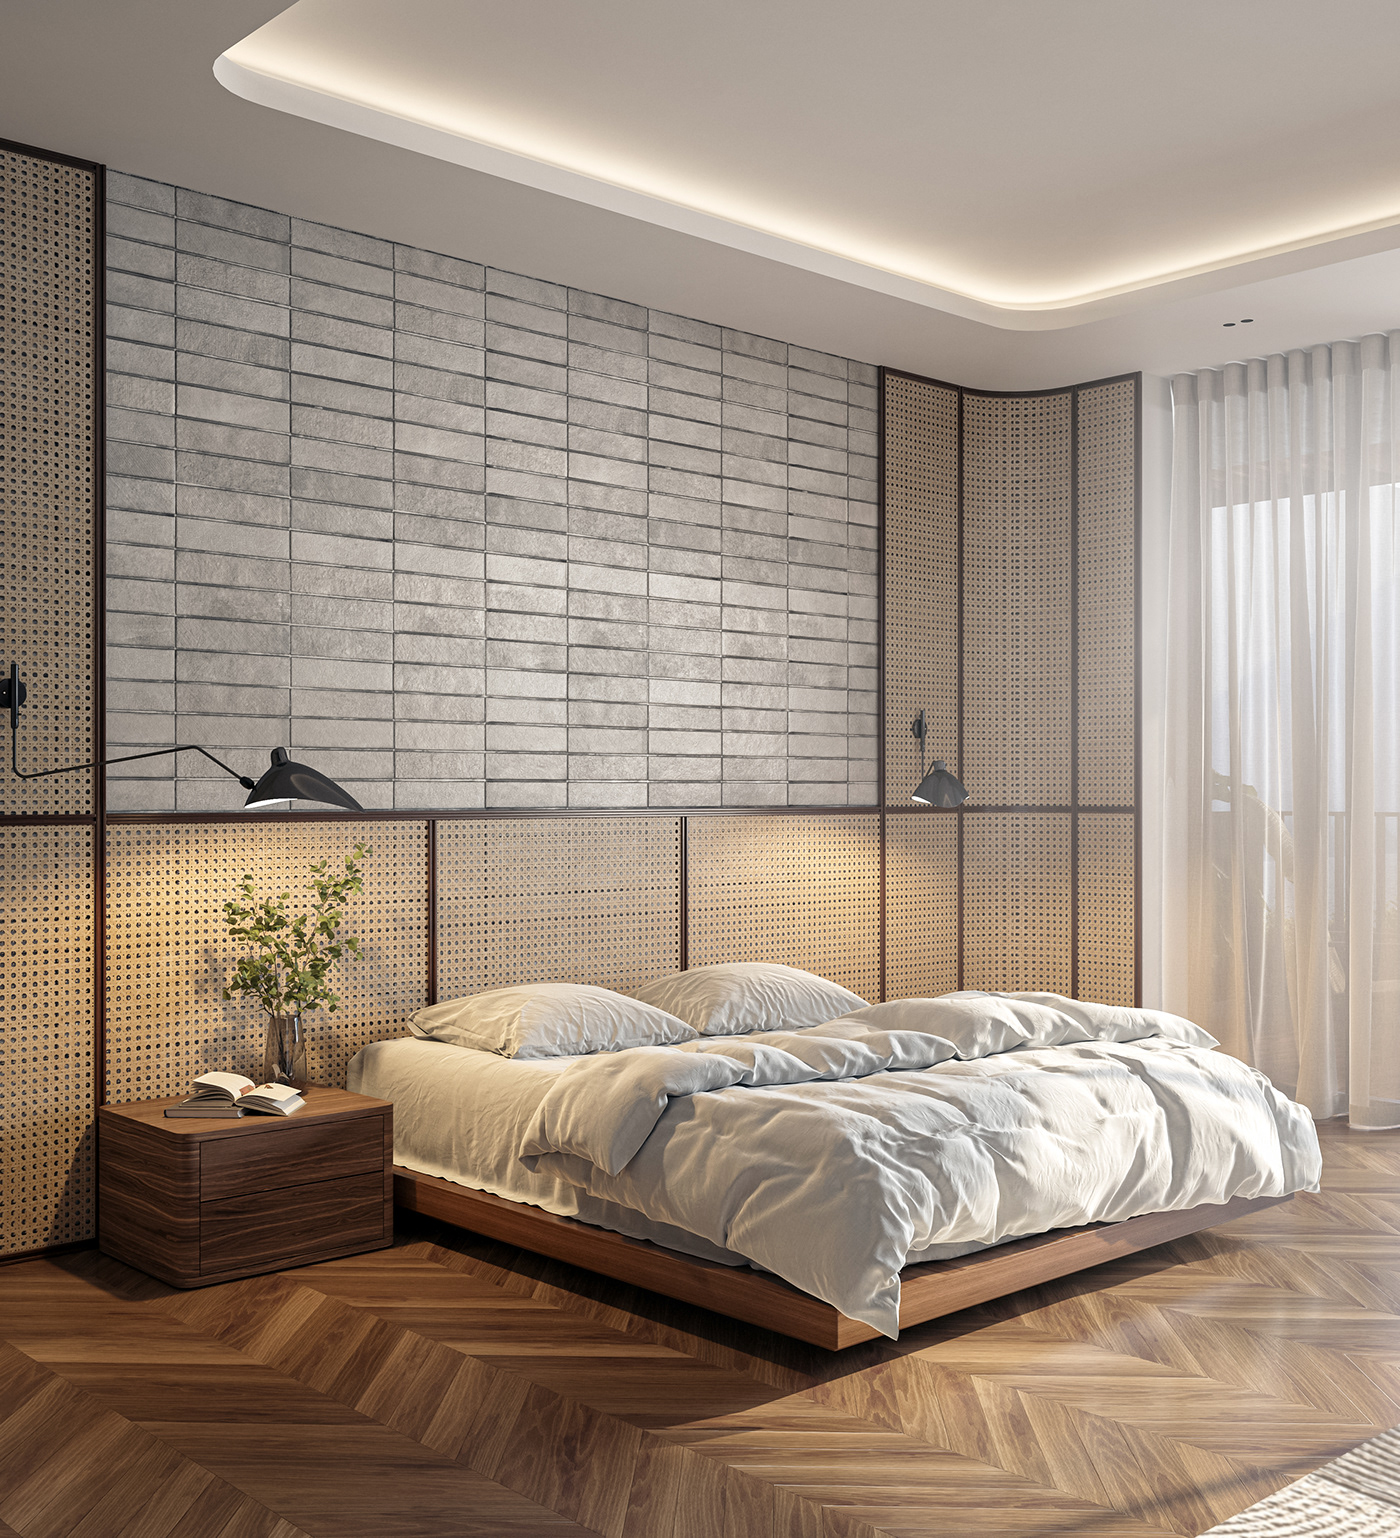 Japandi bedroom on Behance